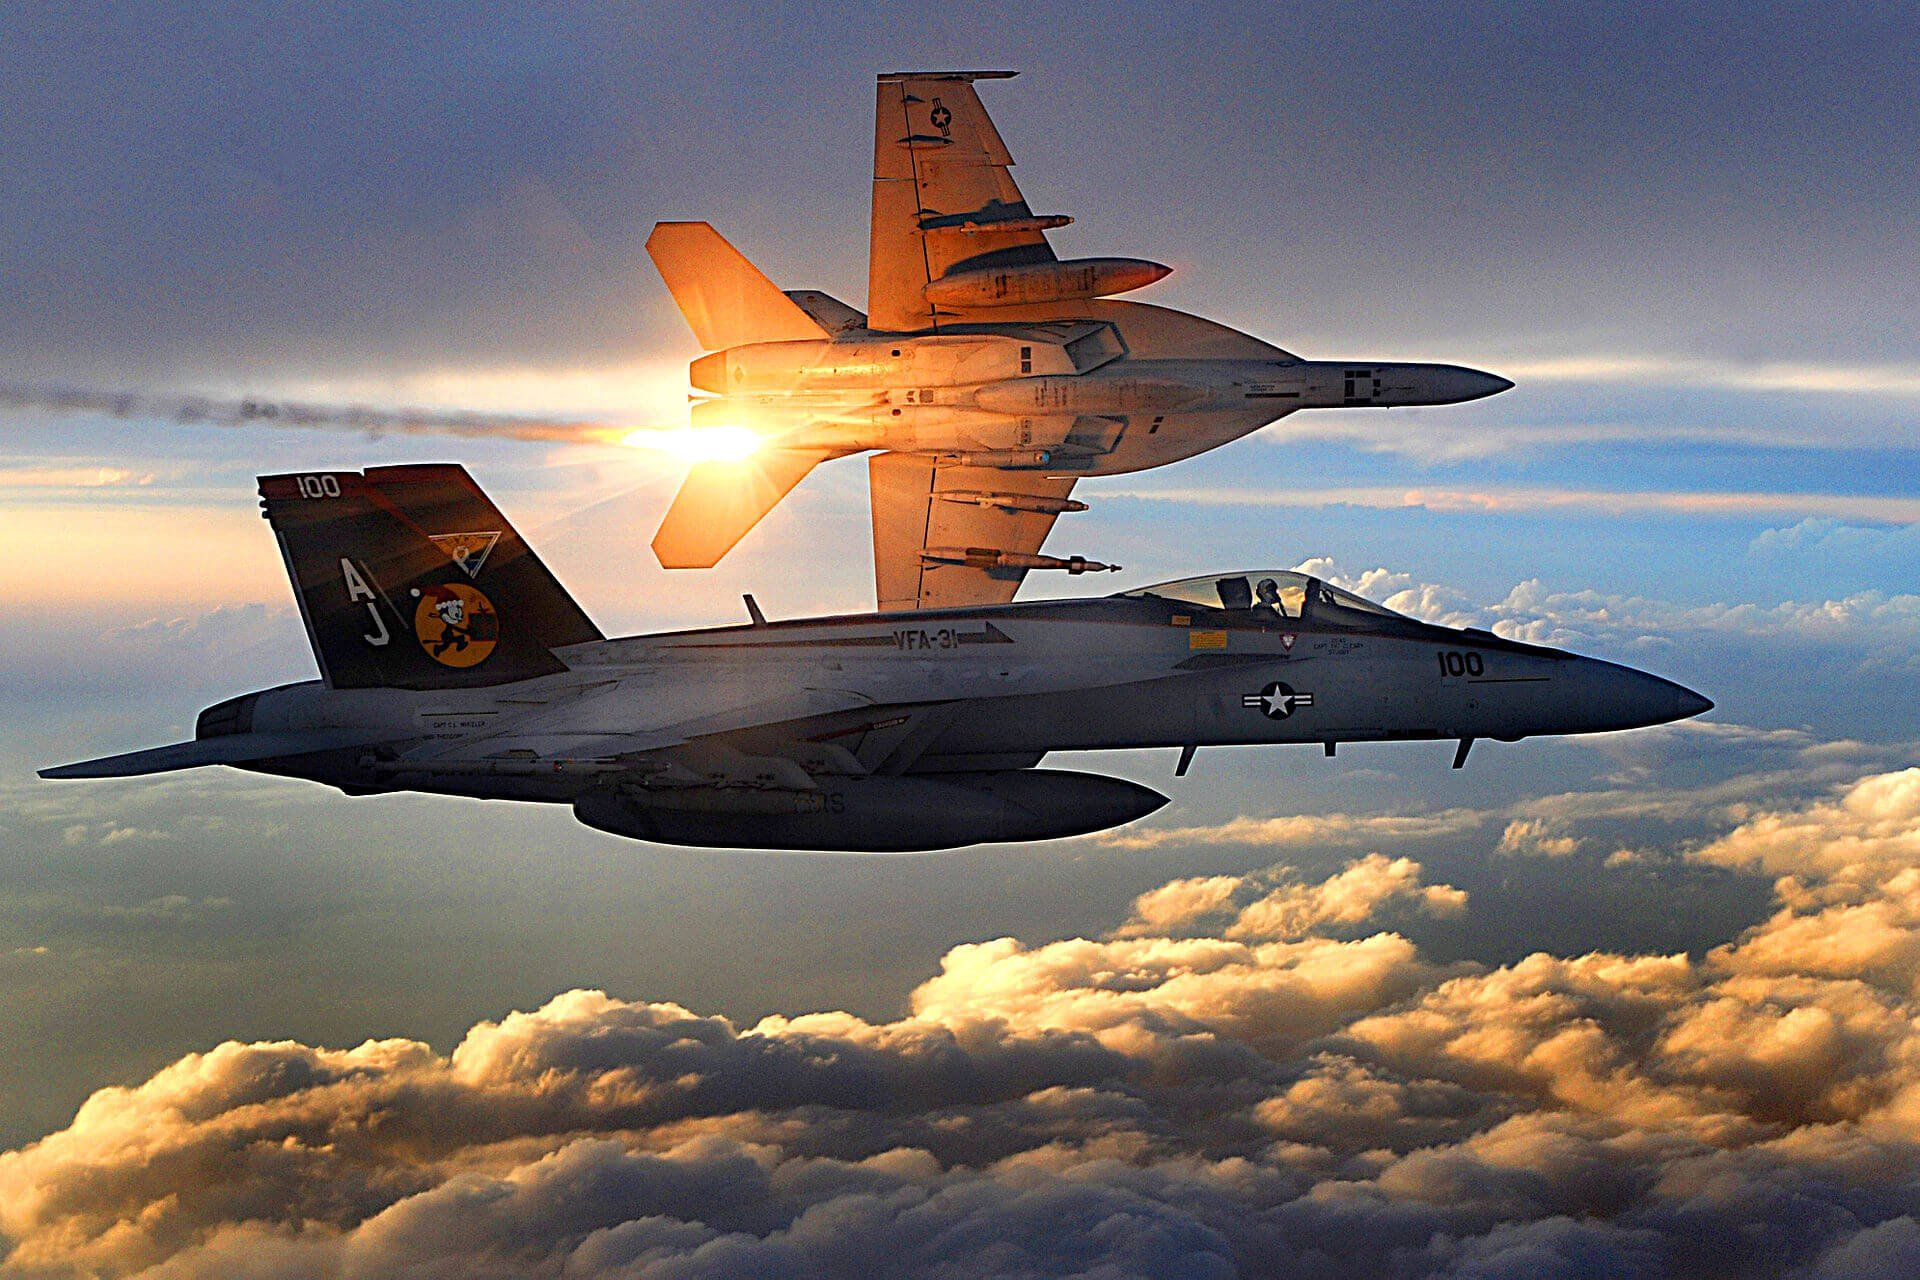 F-18 Themebild (Quelle: www.commons.wikimedia.org)